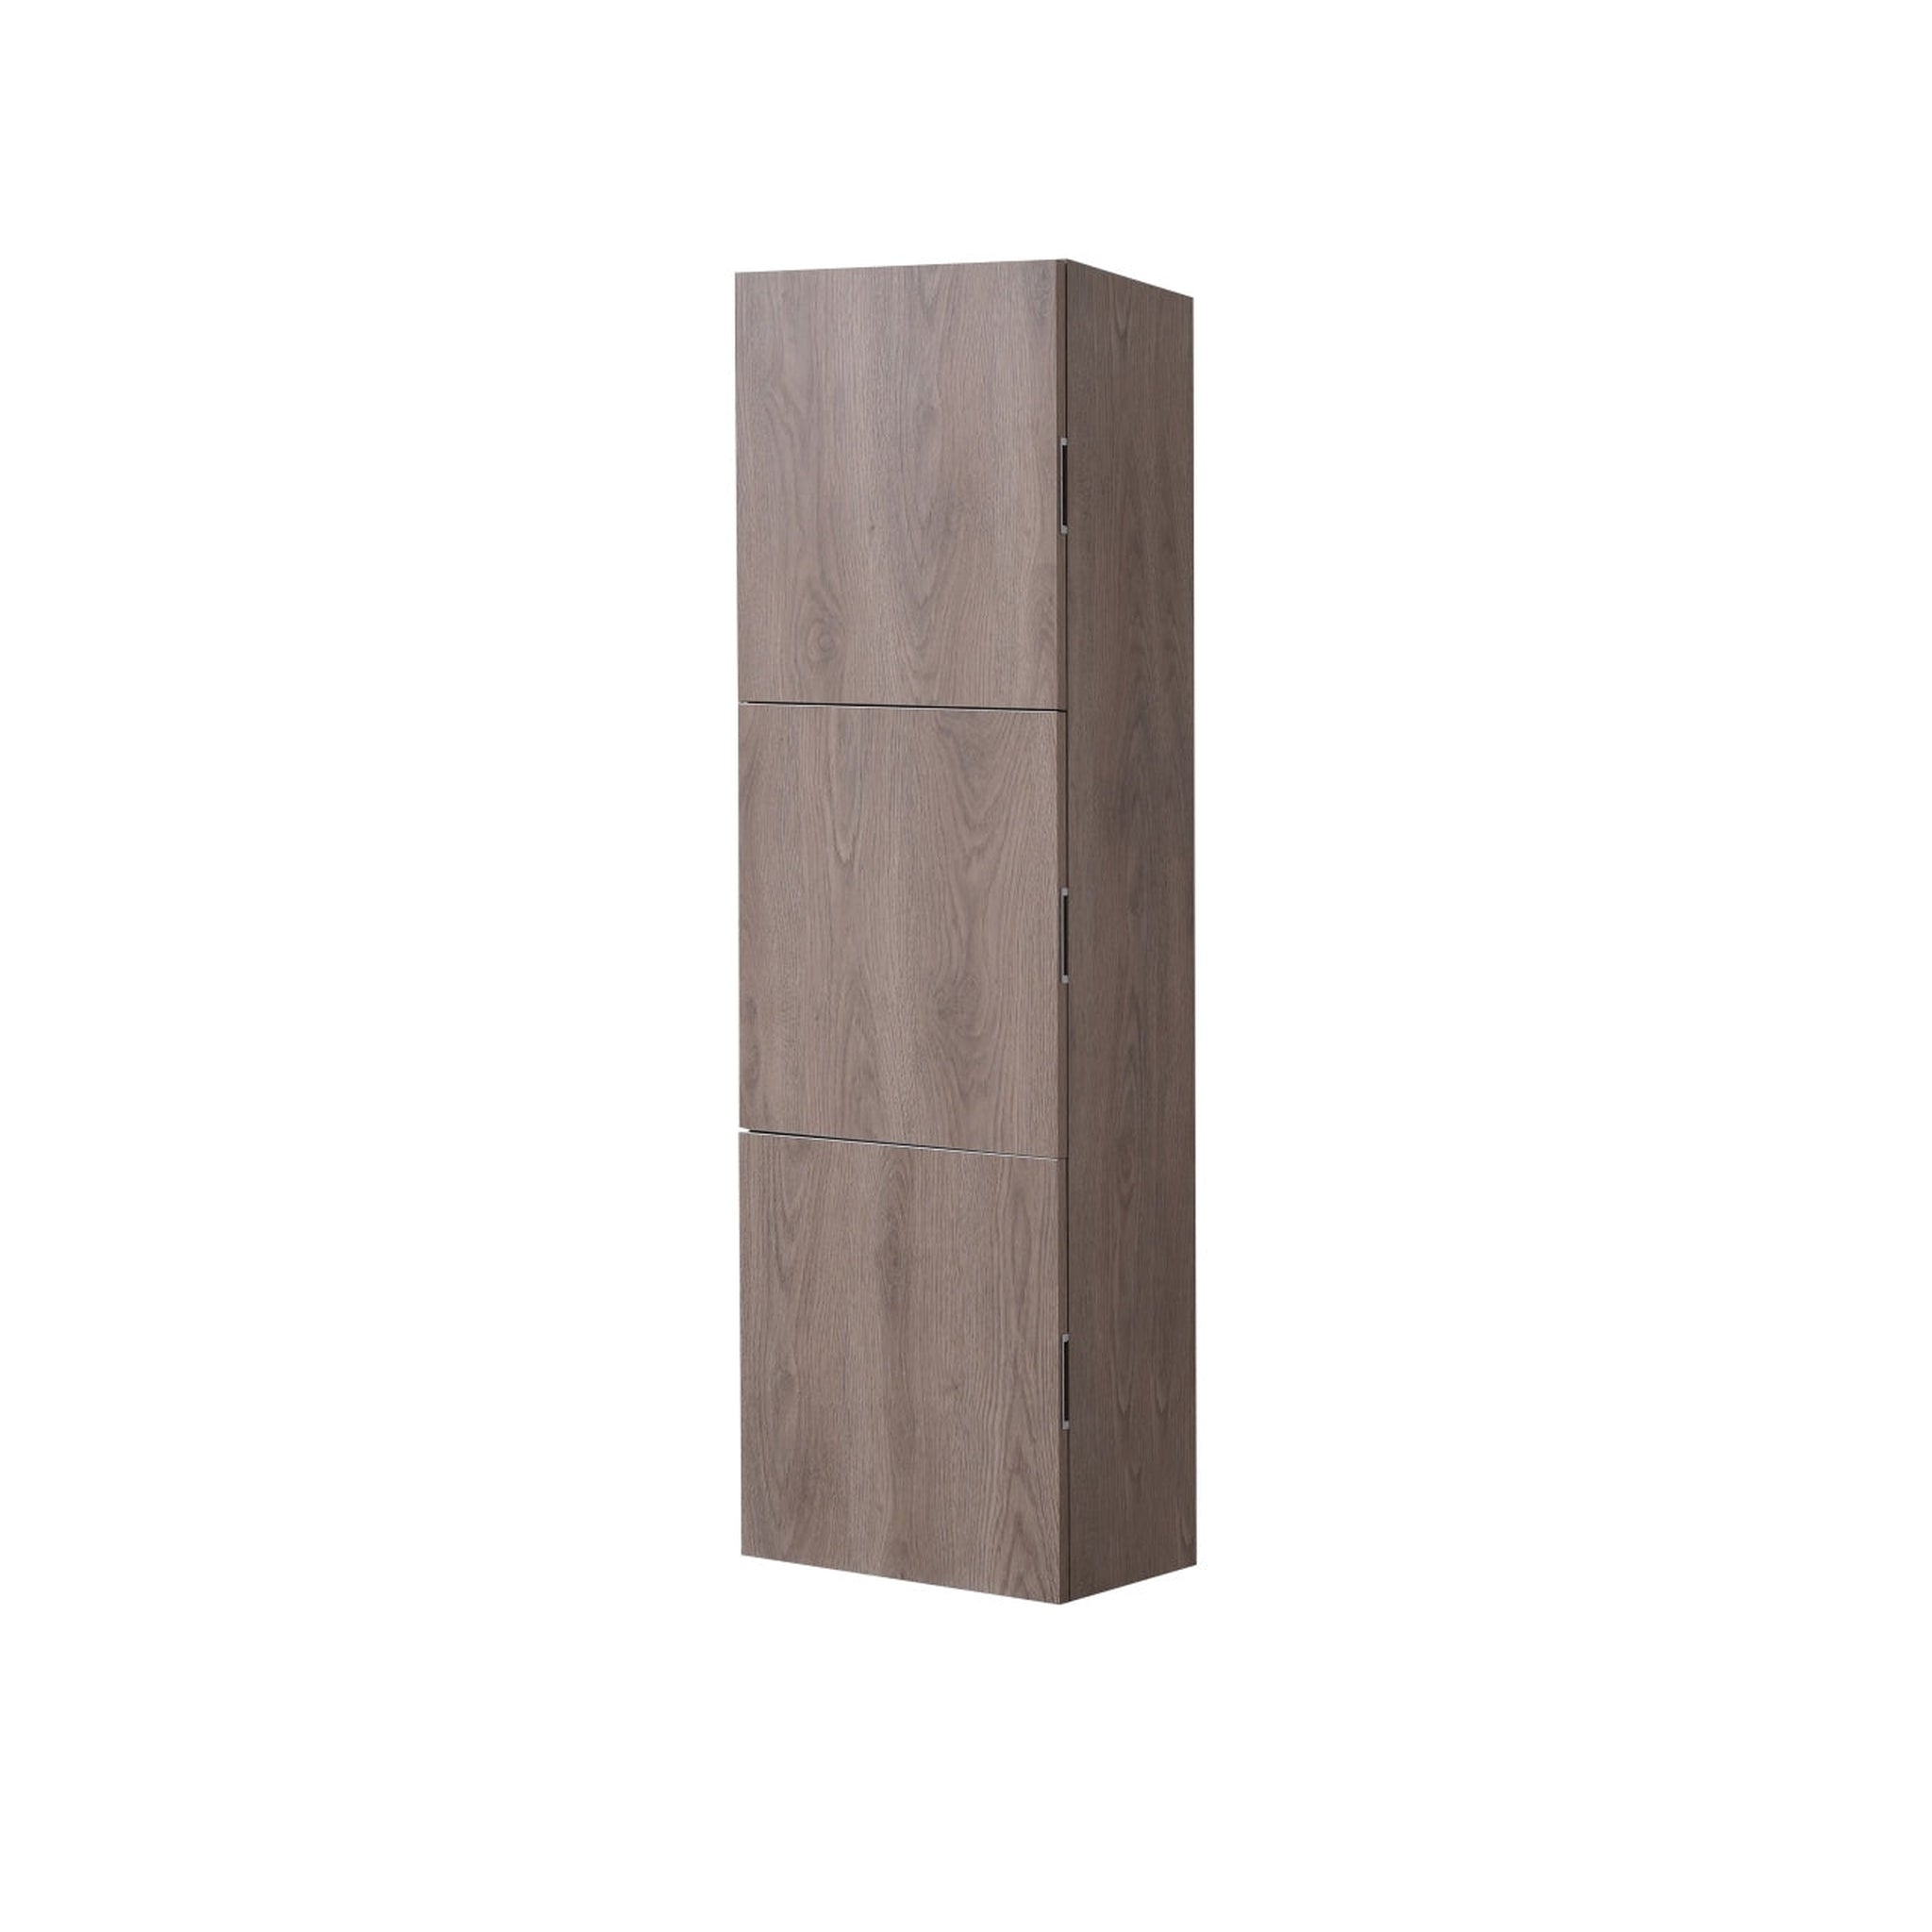 KubeBath, KubeBath Bliss 18"x 59" Butternut Wood Veneer Linen Side Cabinet With Three Storage Areas